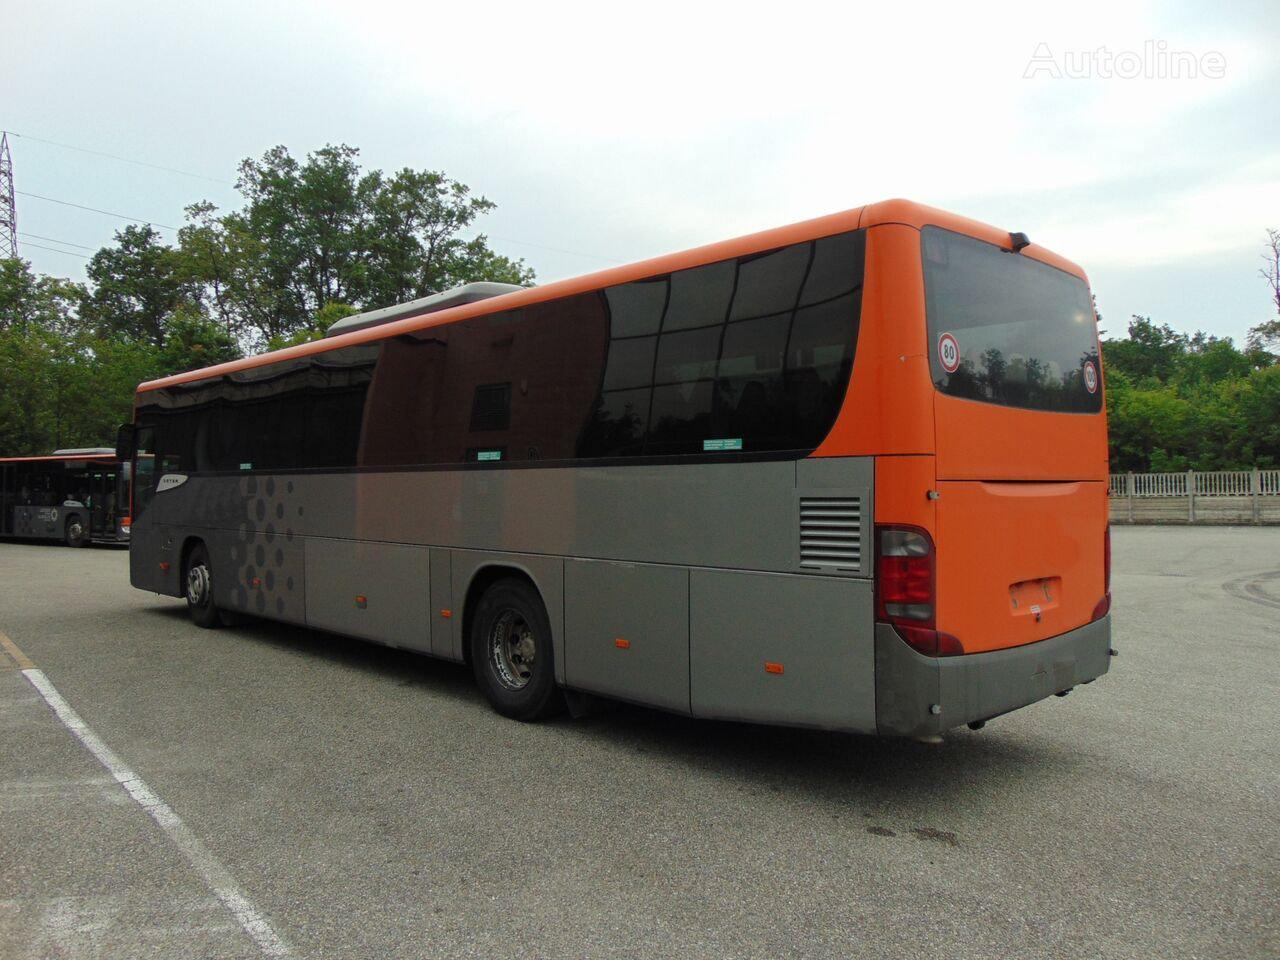 Autobus extraurbano Setra S 415 UL: foto 5